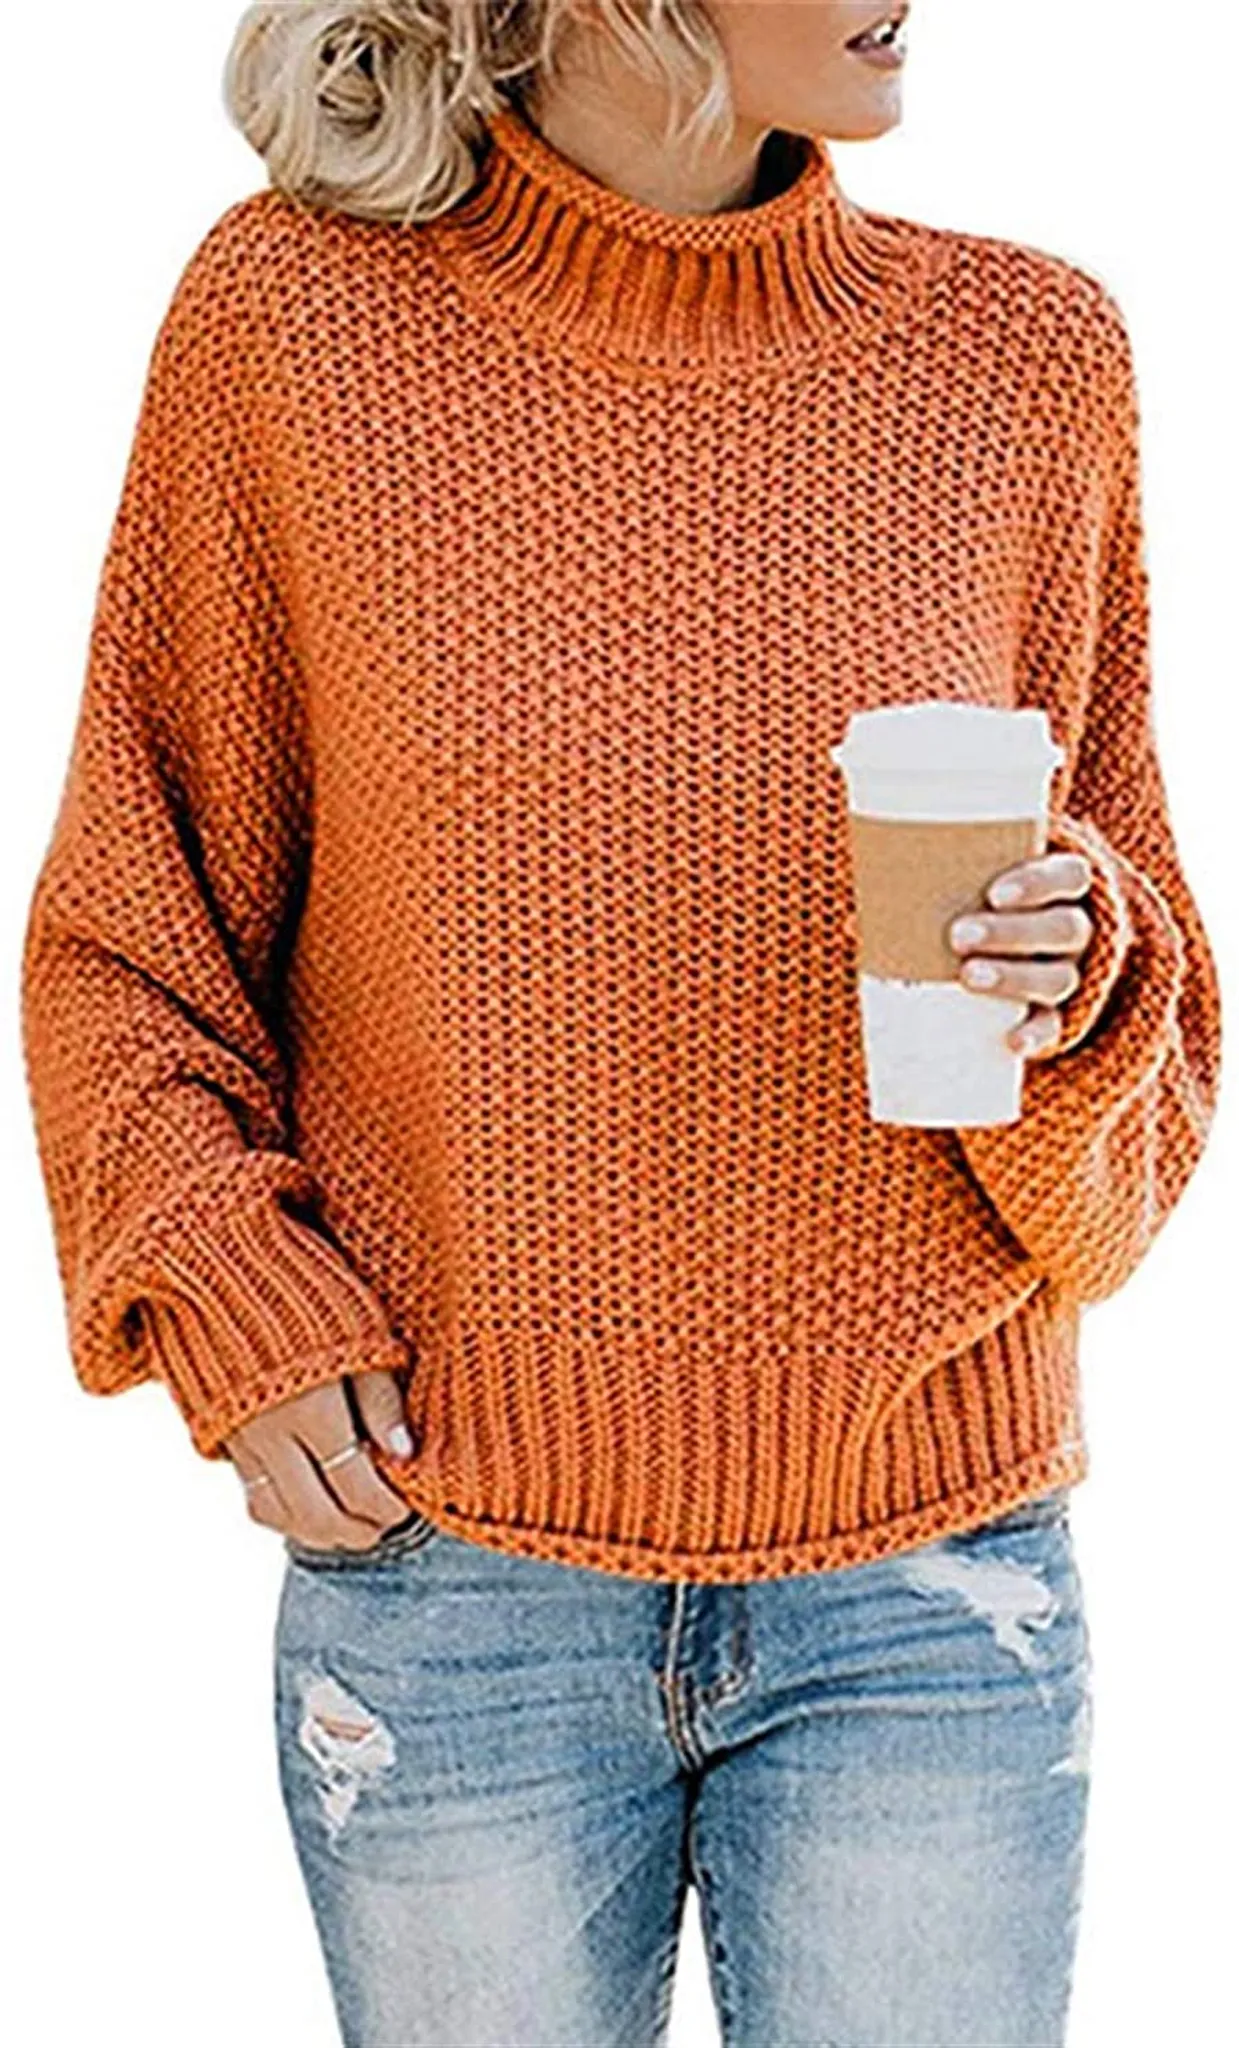 ASKSA Damen Strickpullover Einfarbig Rollkragenpullover Pullover Pulli Knit M Orange, Sweatshirt